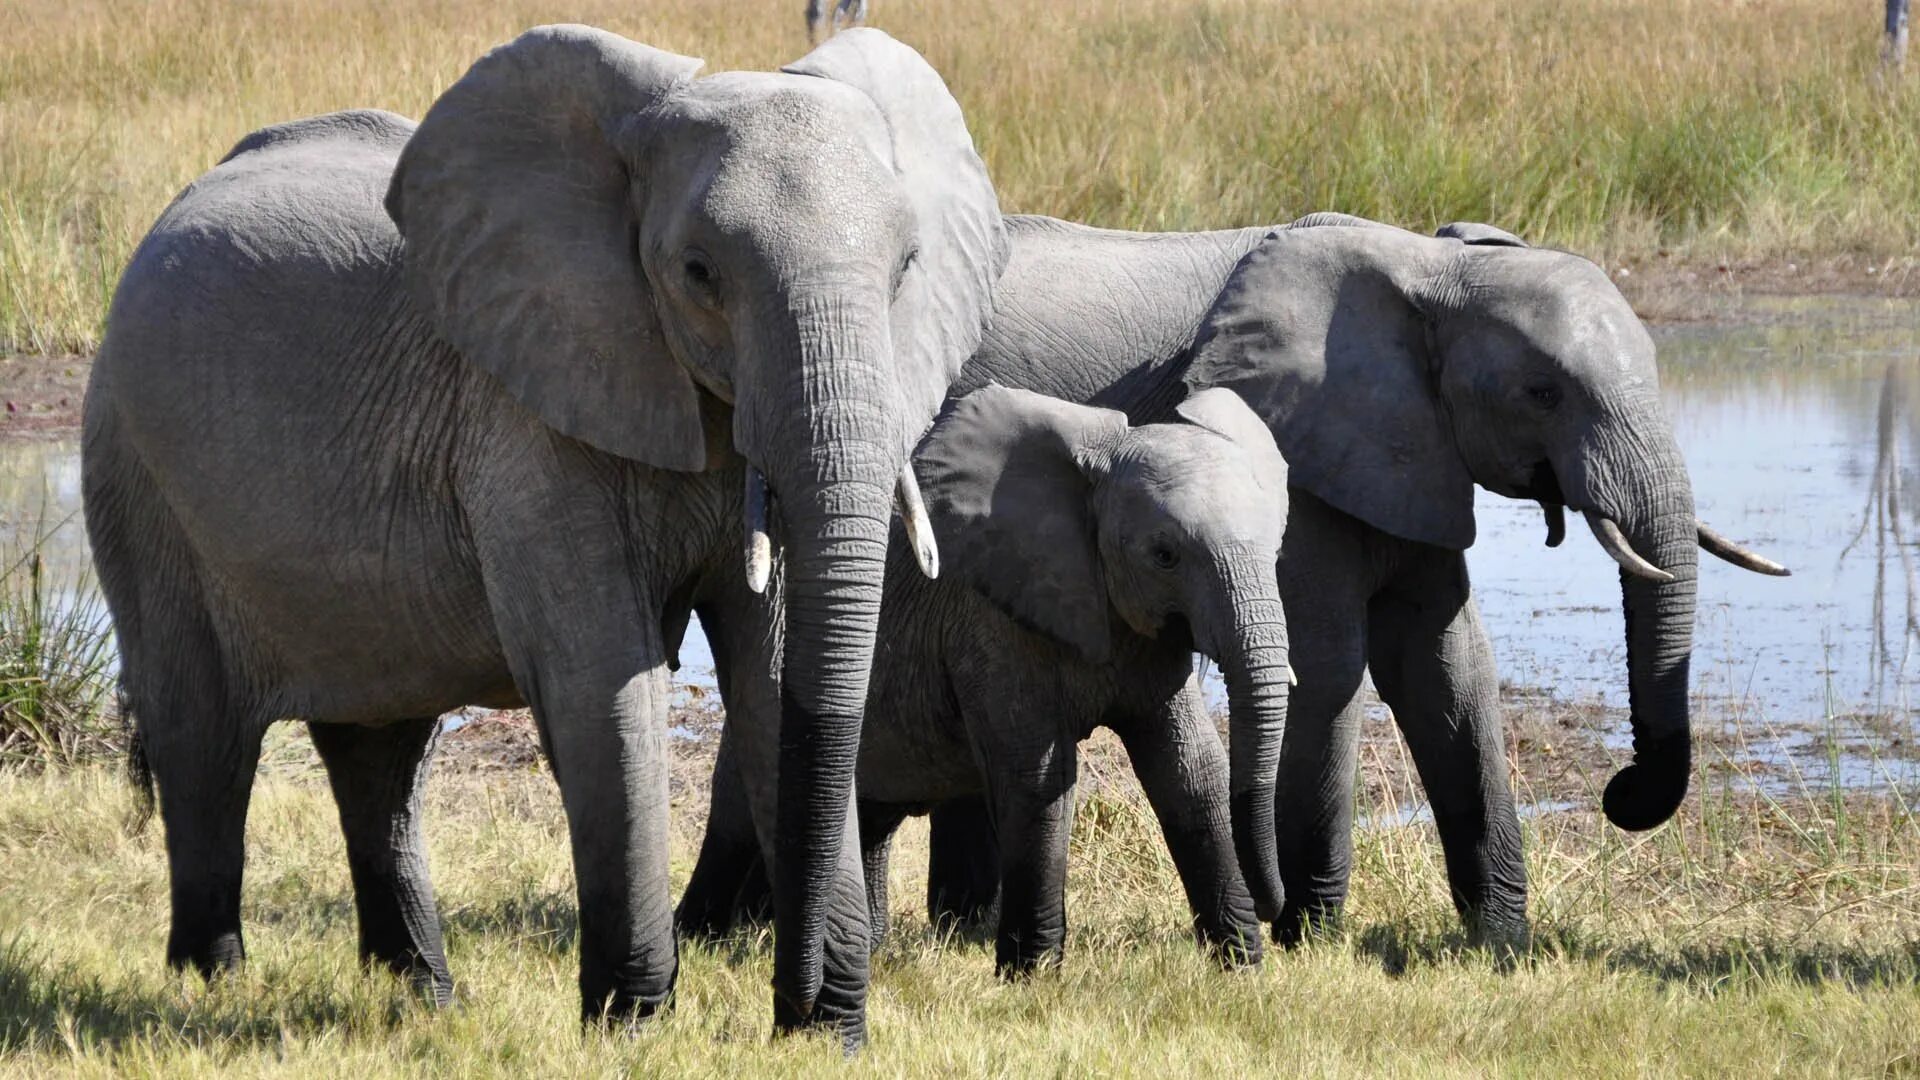 Elephants walking. Африканский слон слон. Саванновый Африканский слон. Африканский слон в Африке. Звери Африки.